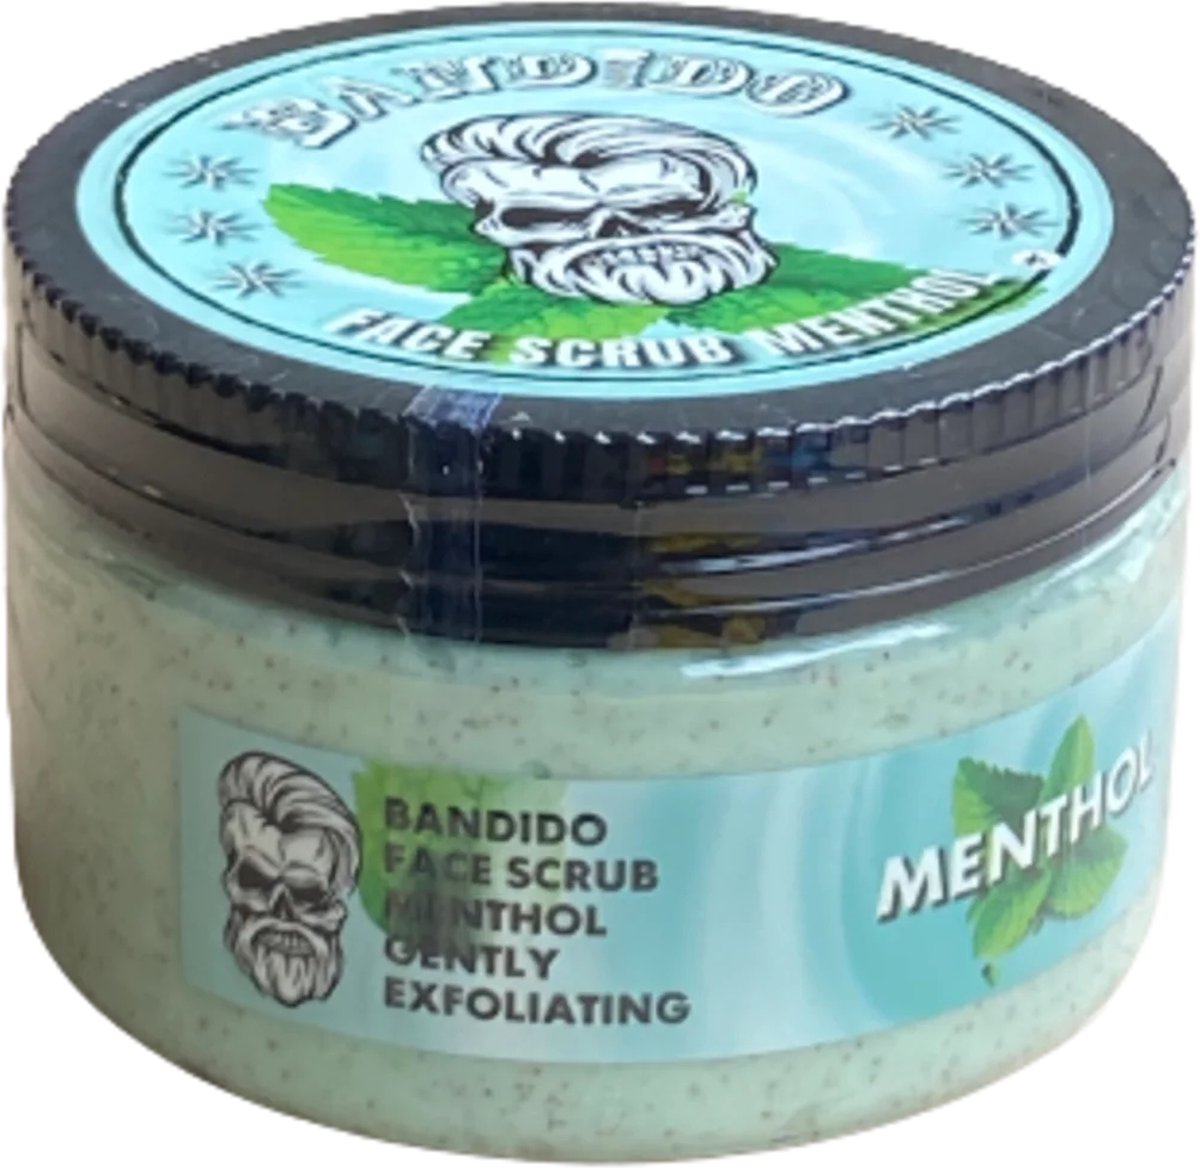 Bandido Face Scrub Menthol Gently Exfoliant 350 ml - Bandido